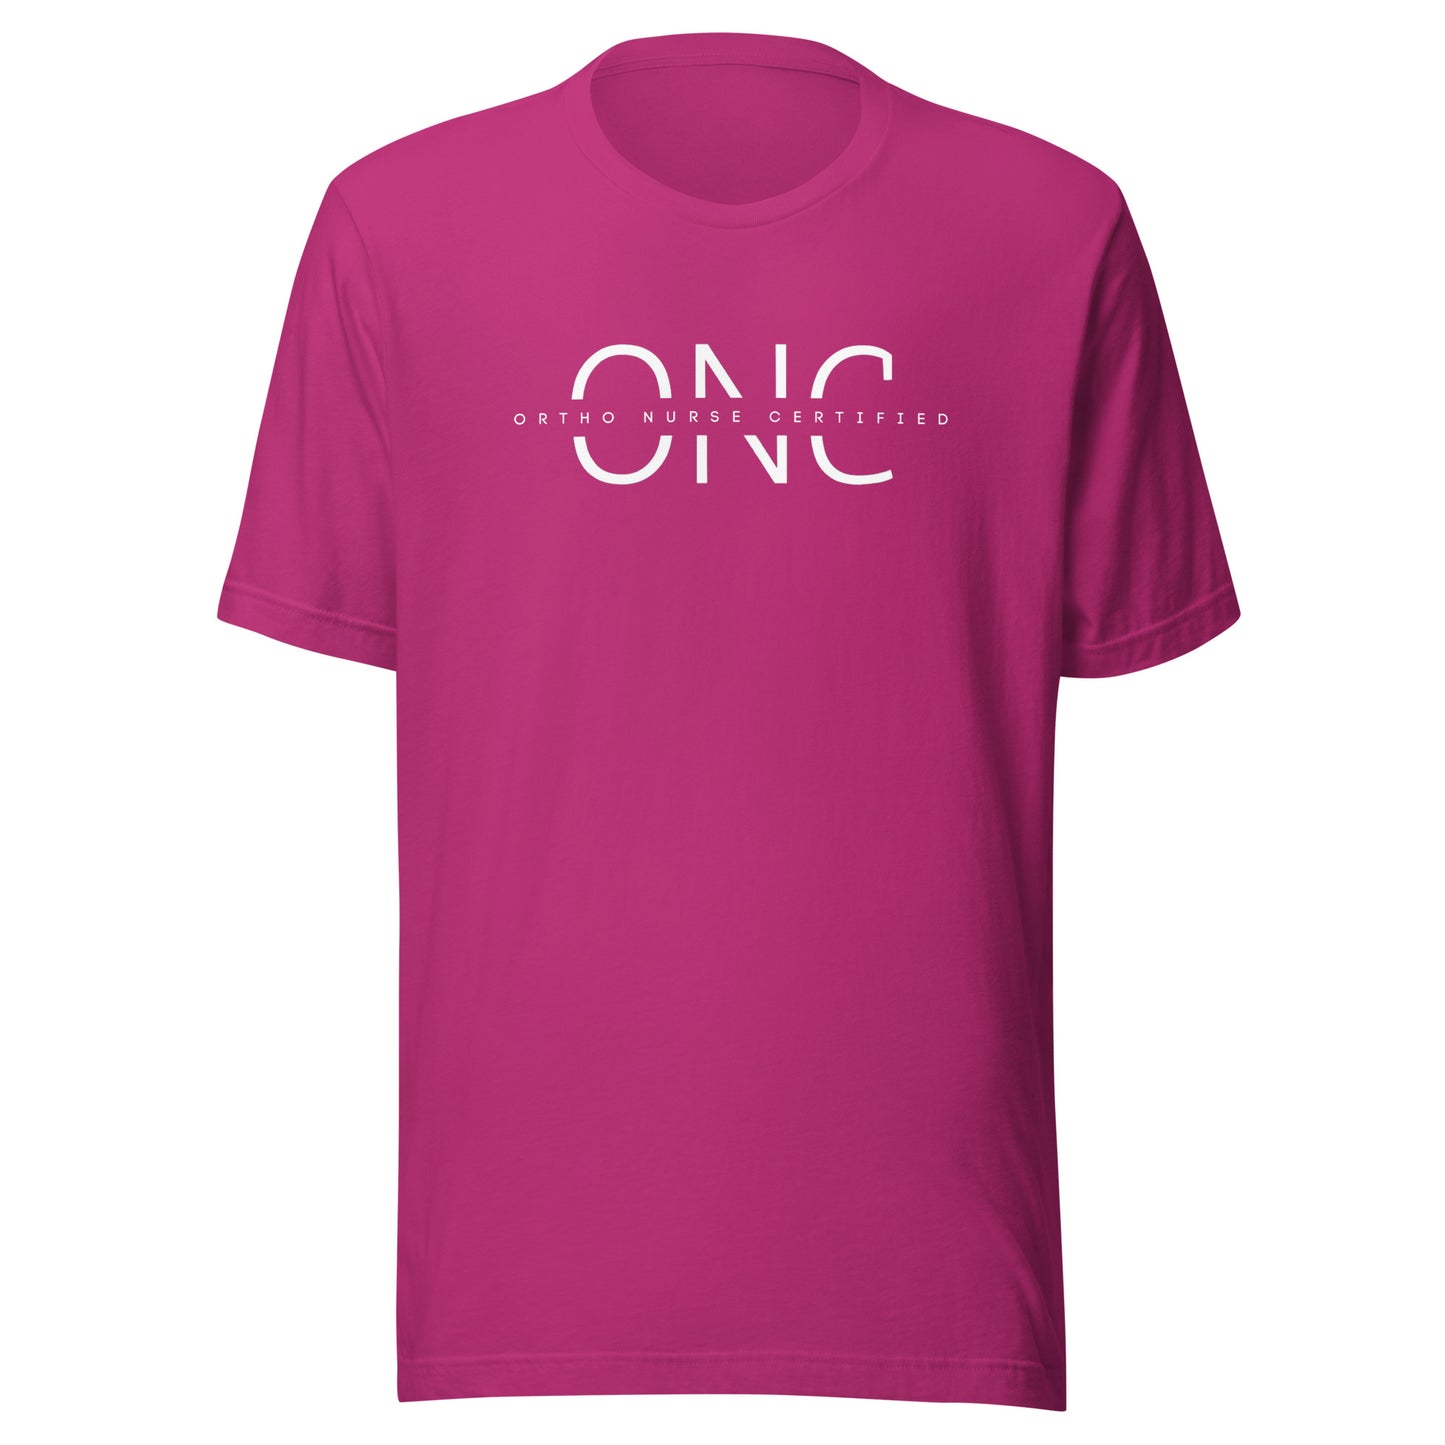 OCN Ortho Nurse Certified t-shirt